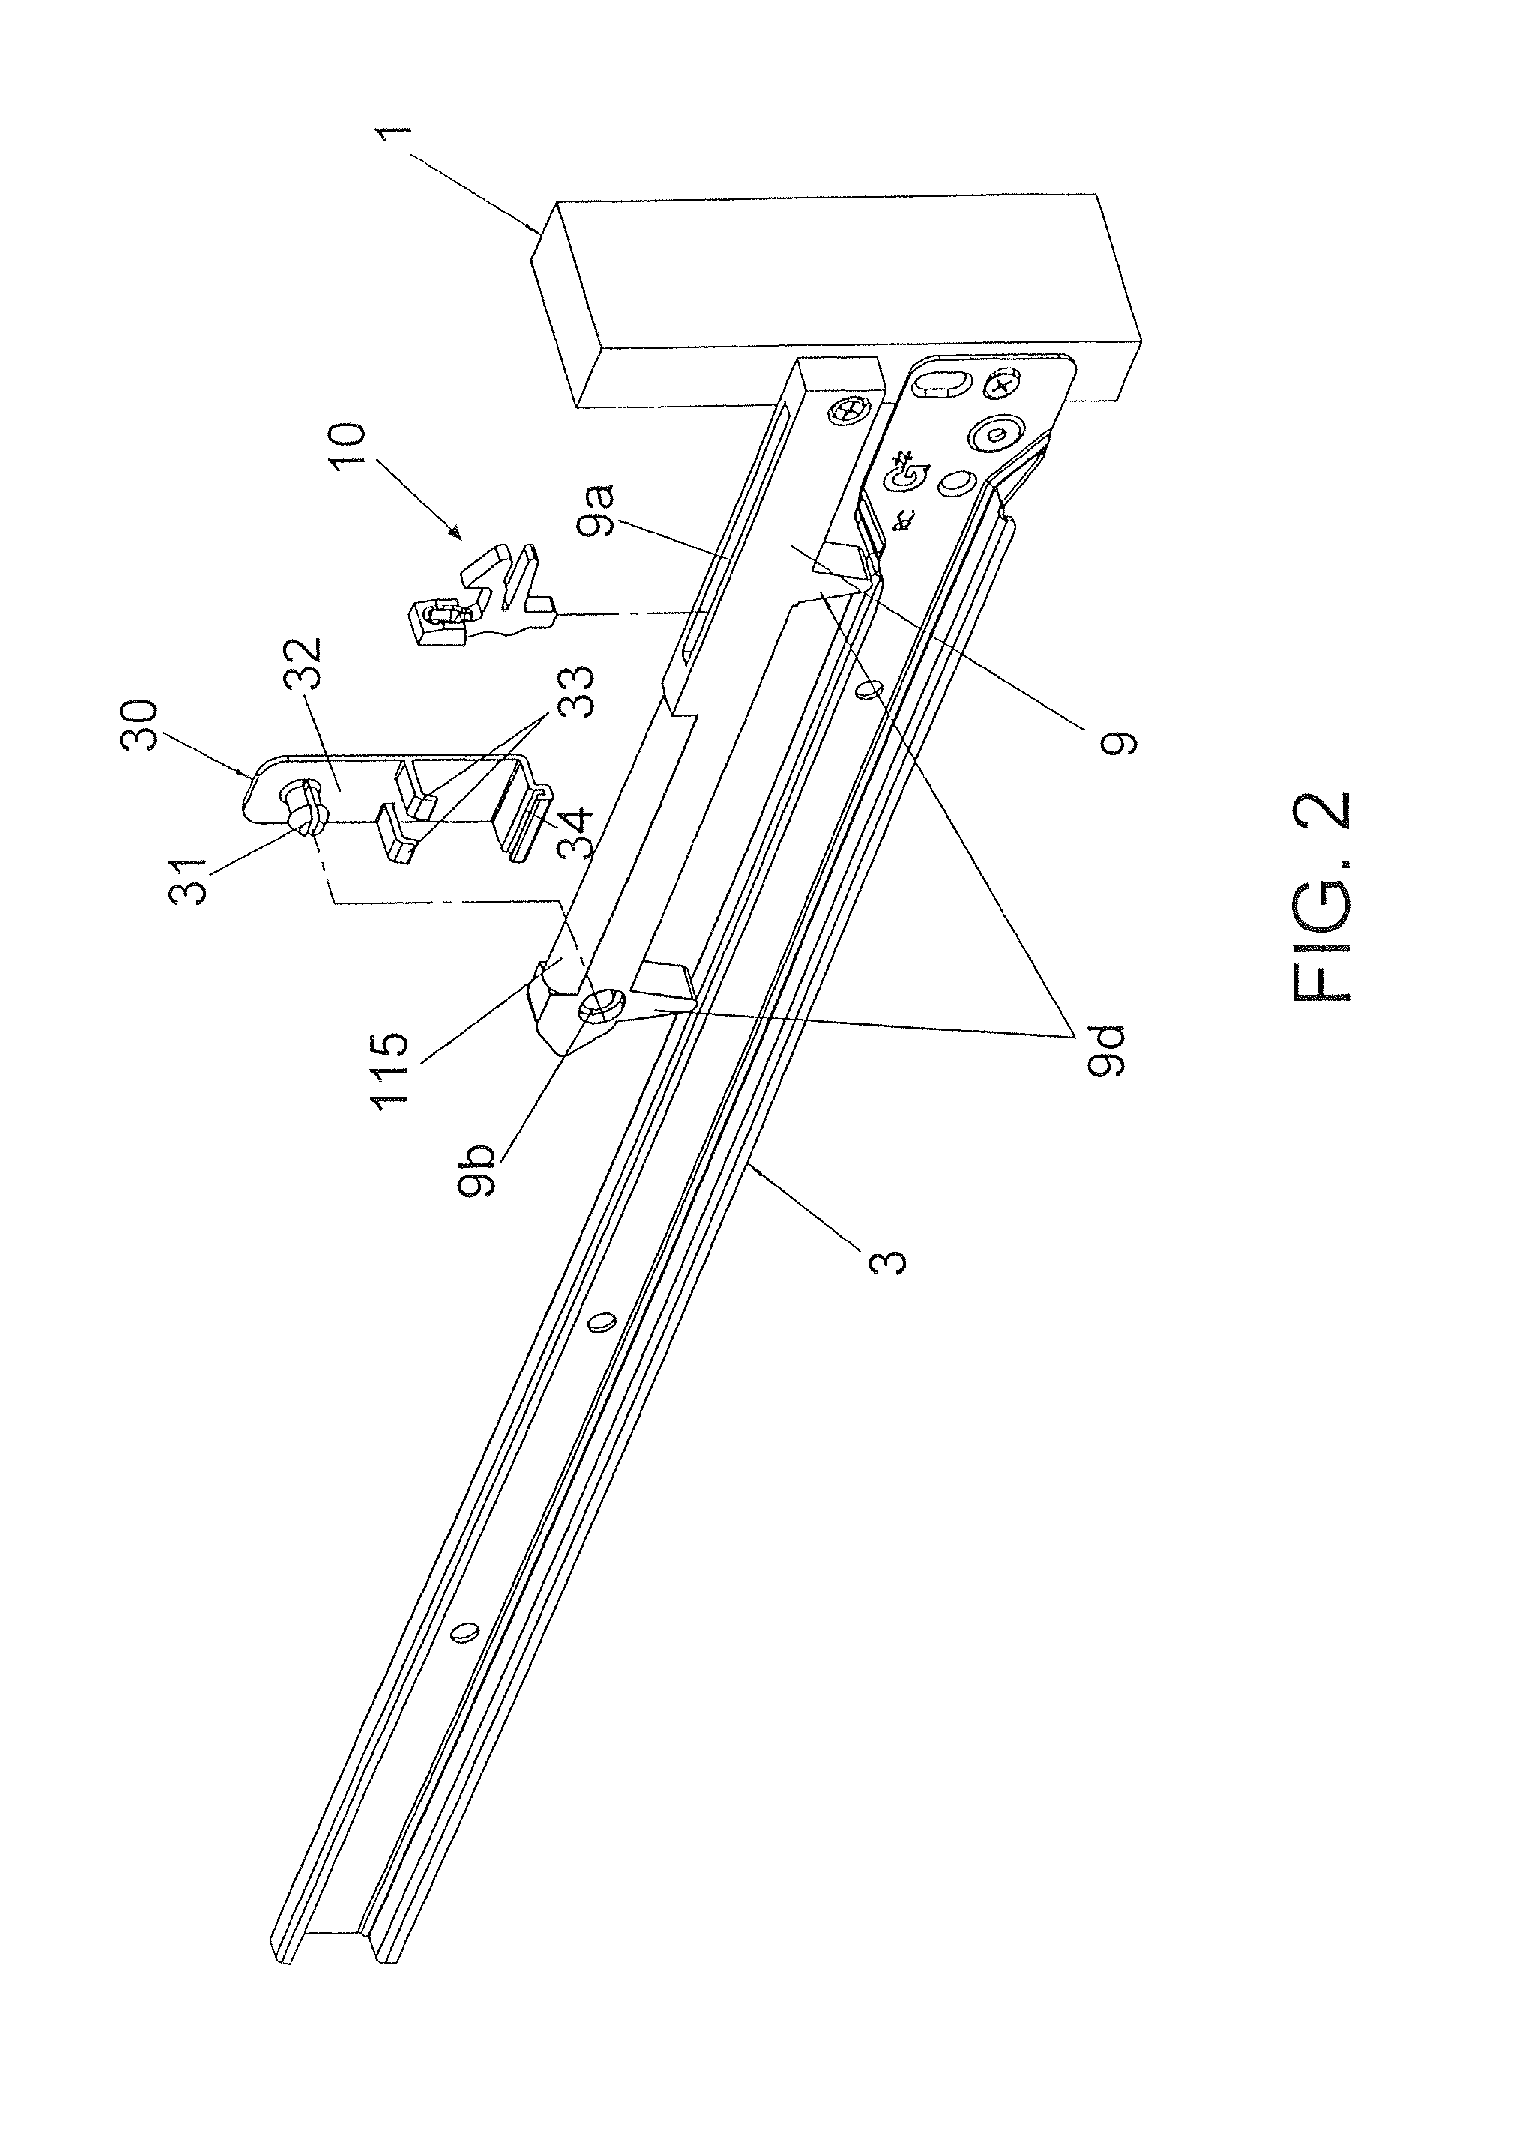 Control mechanism for drawer slide assembly